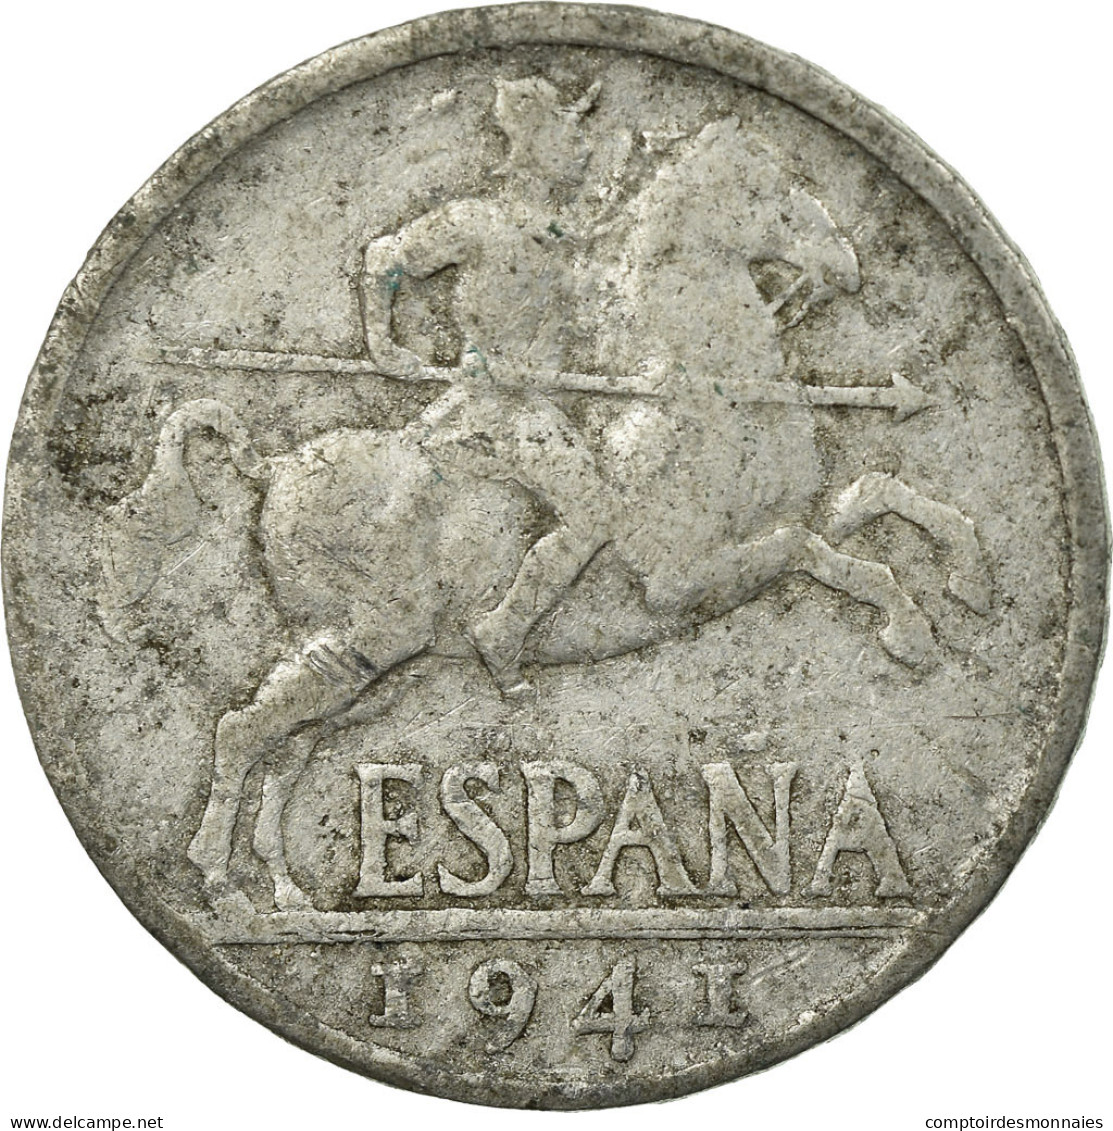 Monnaie, Espagne, 10 Centimos, 1941, TTB, Aluminium, KM:766 - 10 Centesimi